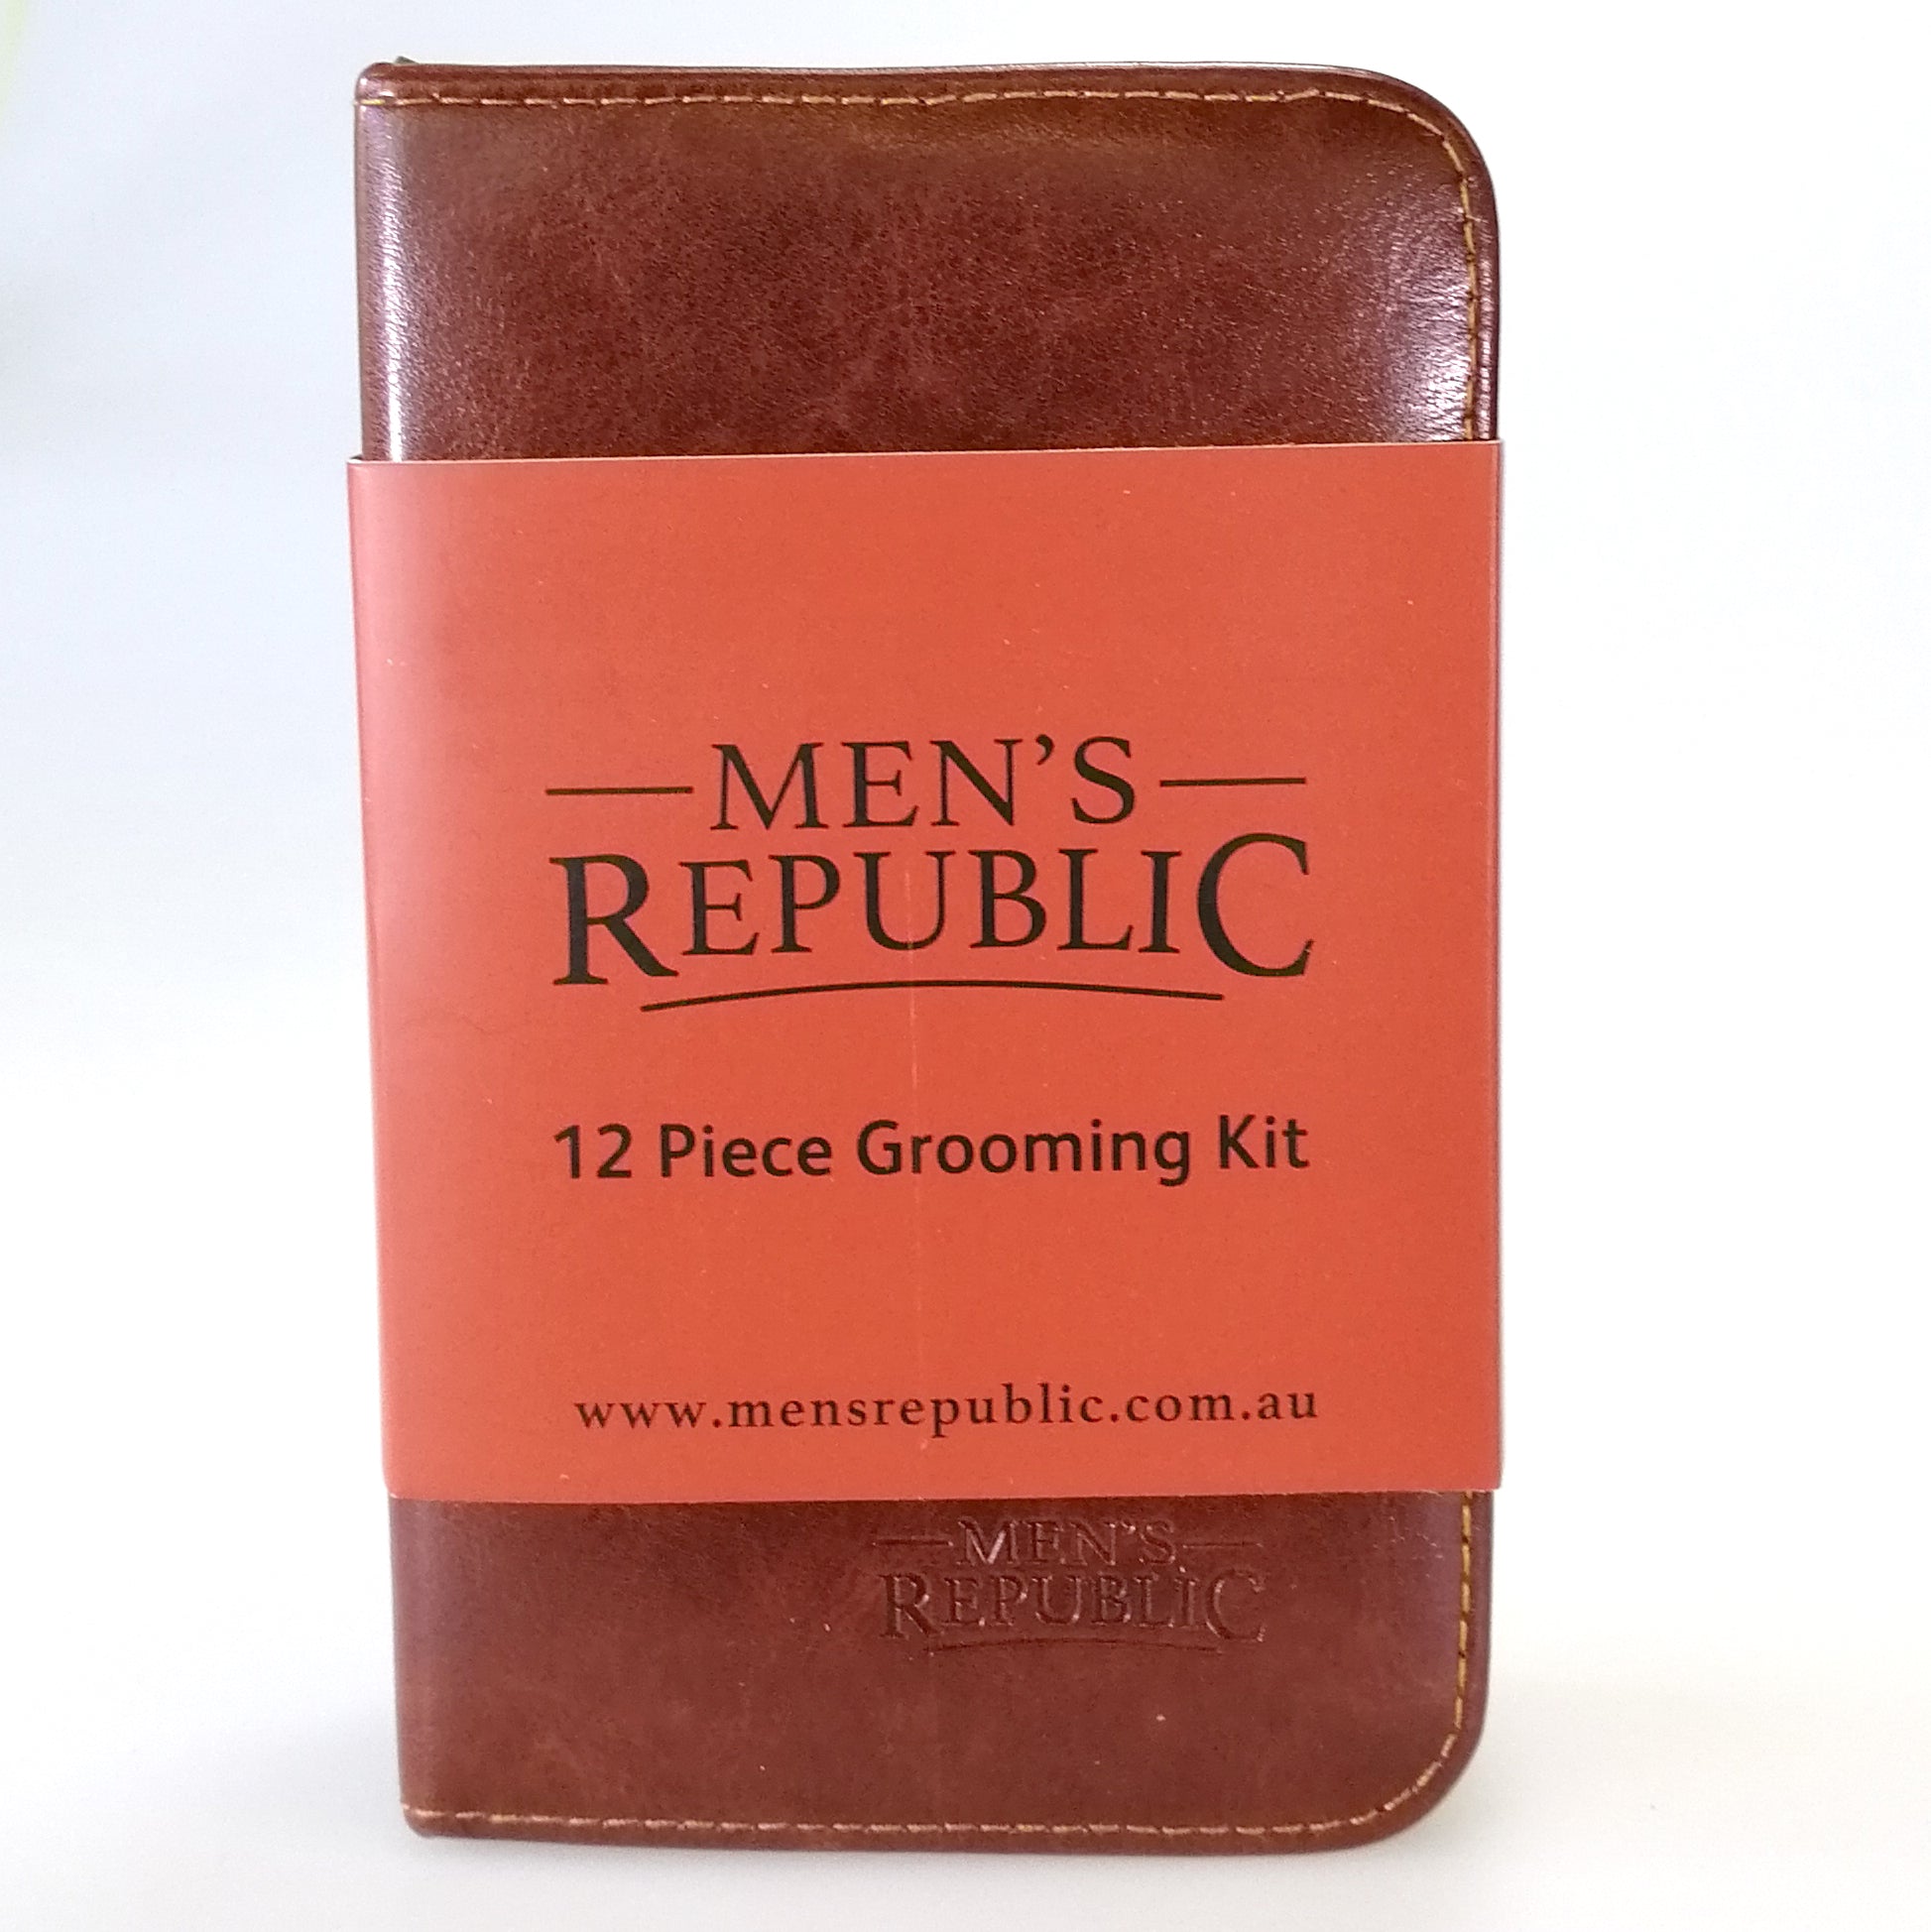 Men's Republic - Grooming Kit - 12 Piece